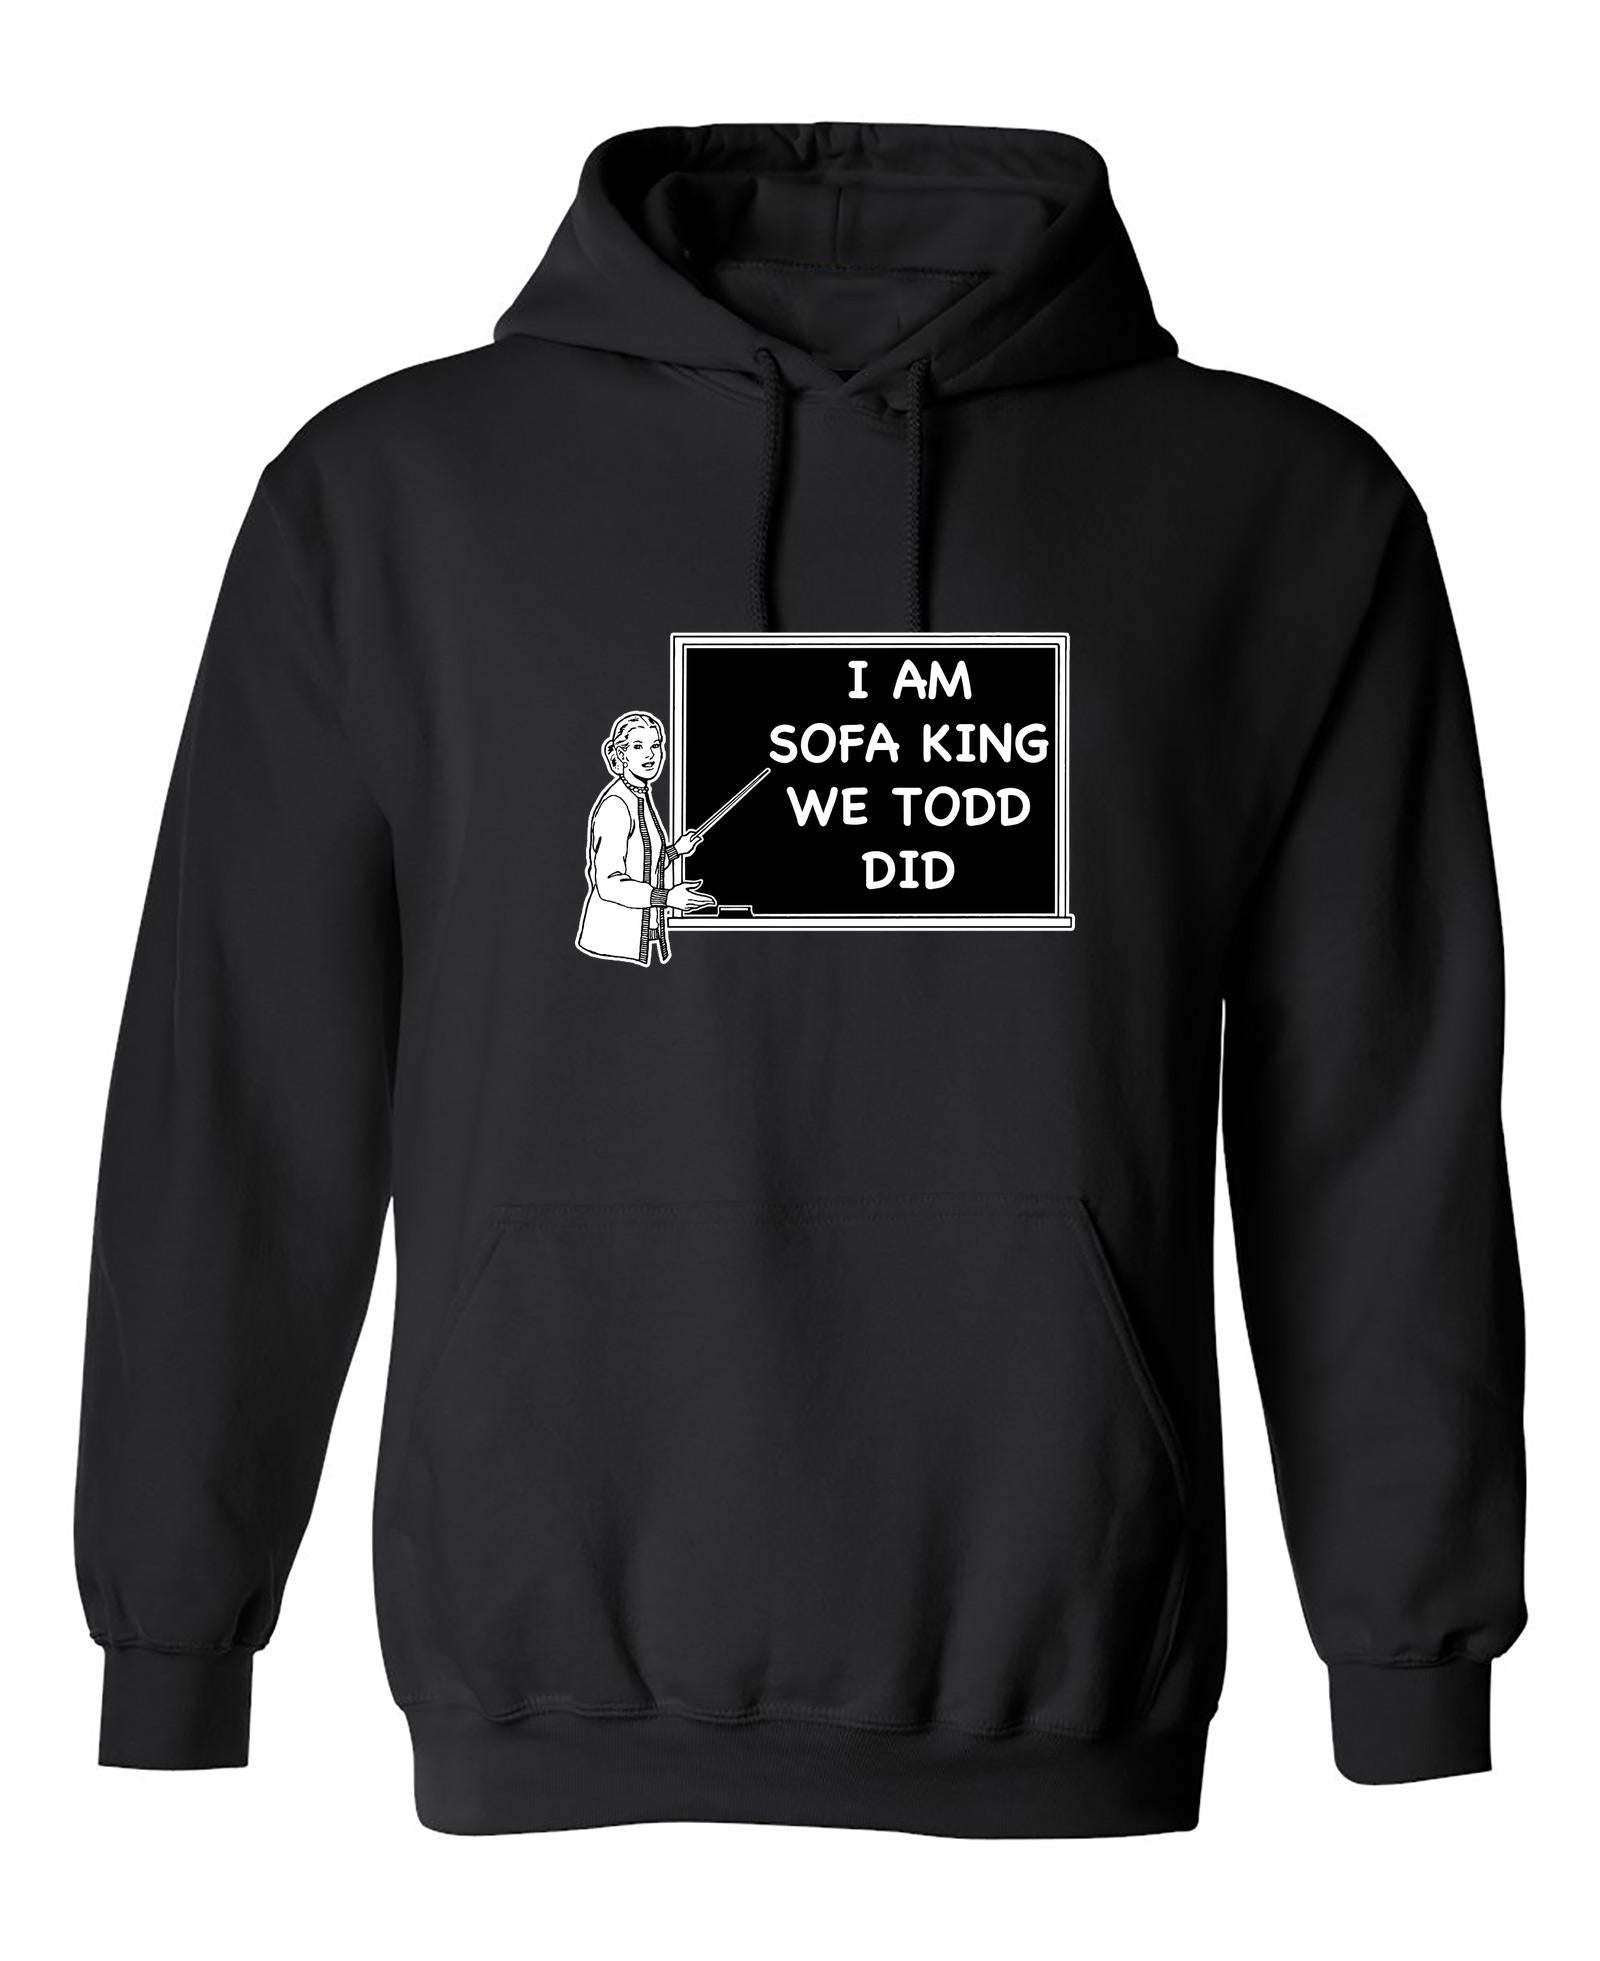 Funny T-Shirts design "I Am Sofa King We Todd Did"